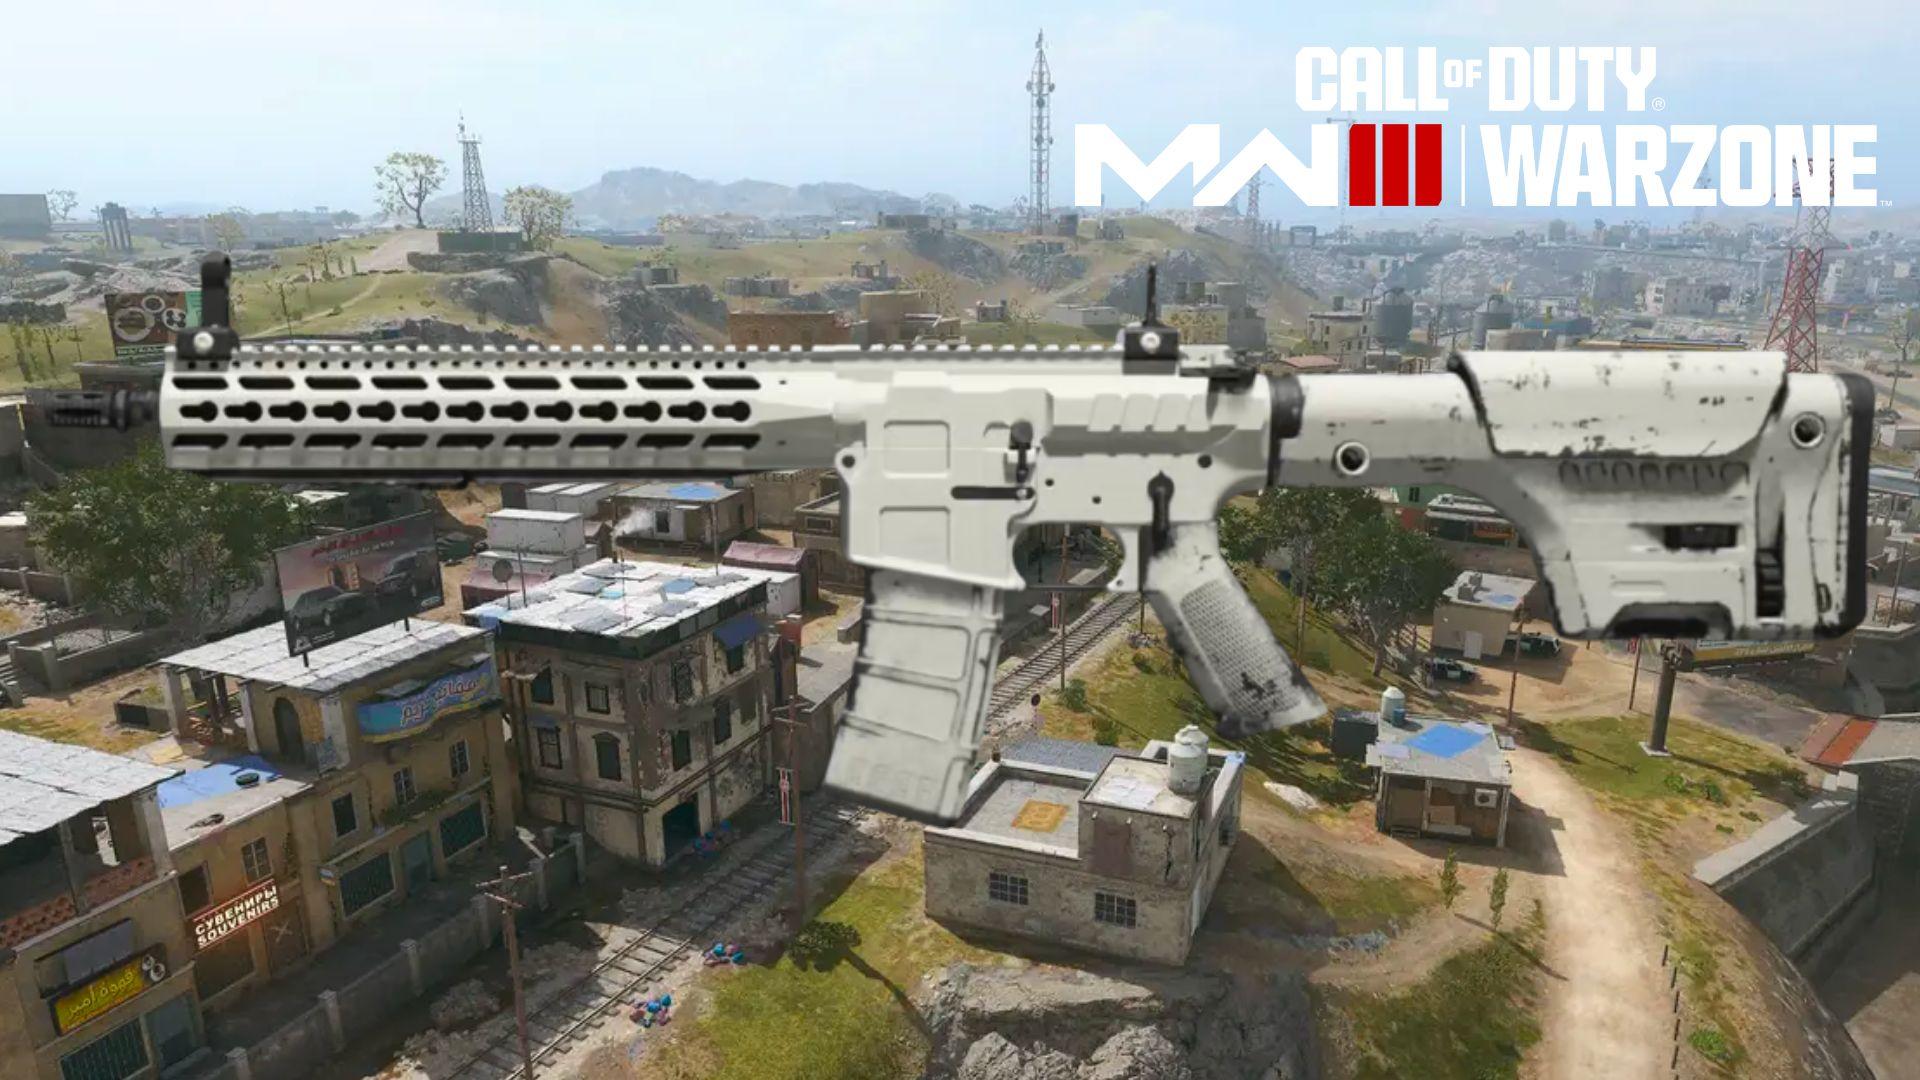 White FTAX Recon from Modern Warfare 2 on Warzone map from Modern Warfare 3